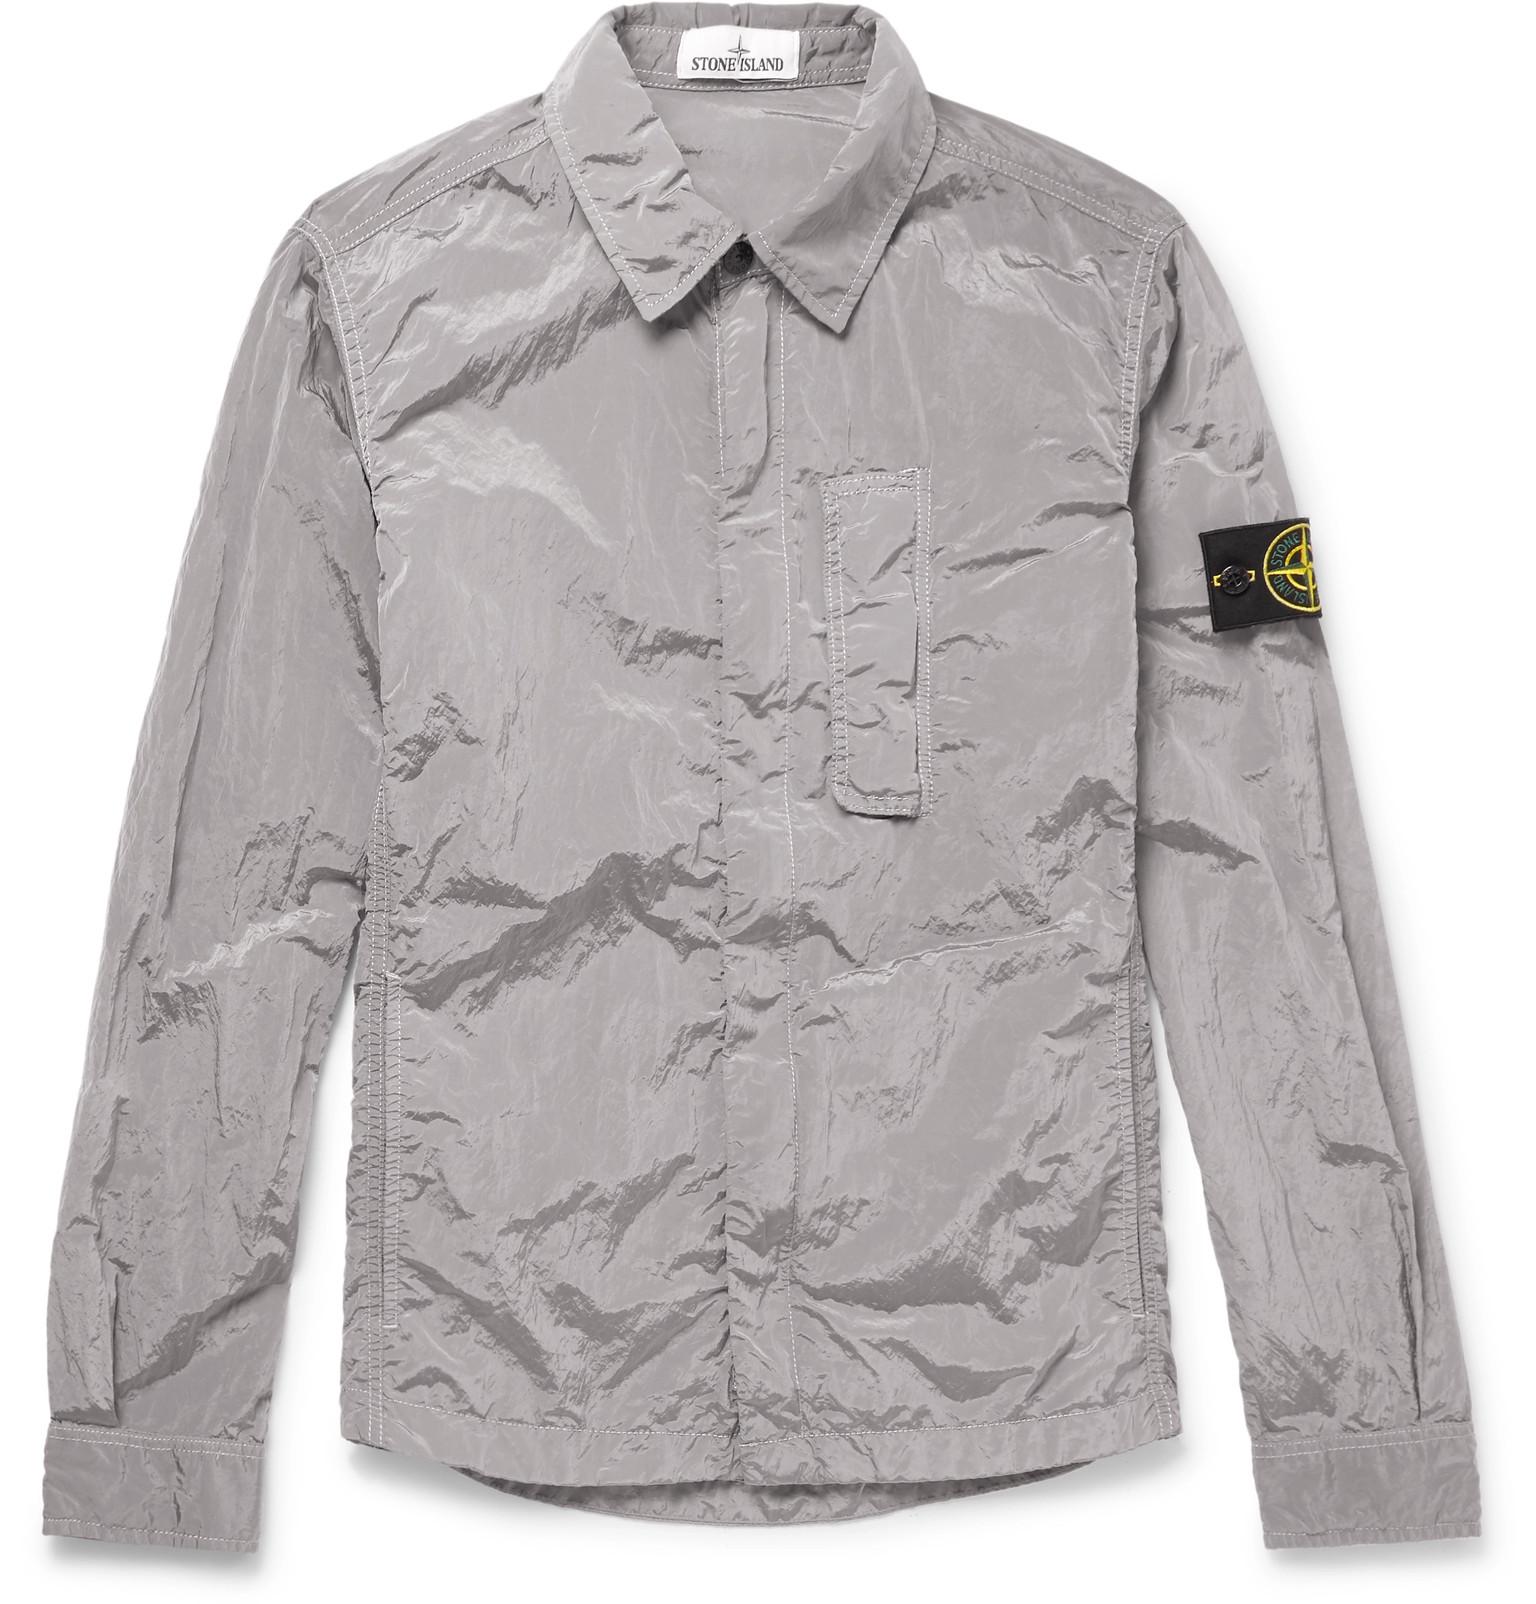 Stone Island Denim Garment-dyed Shell Jacket in Lavender (Grey) for Men -  Lyst